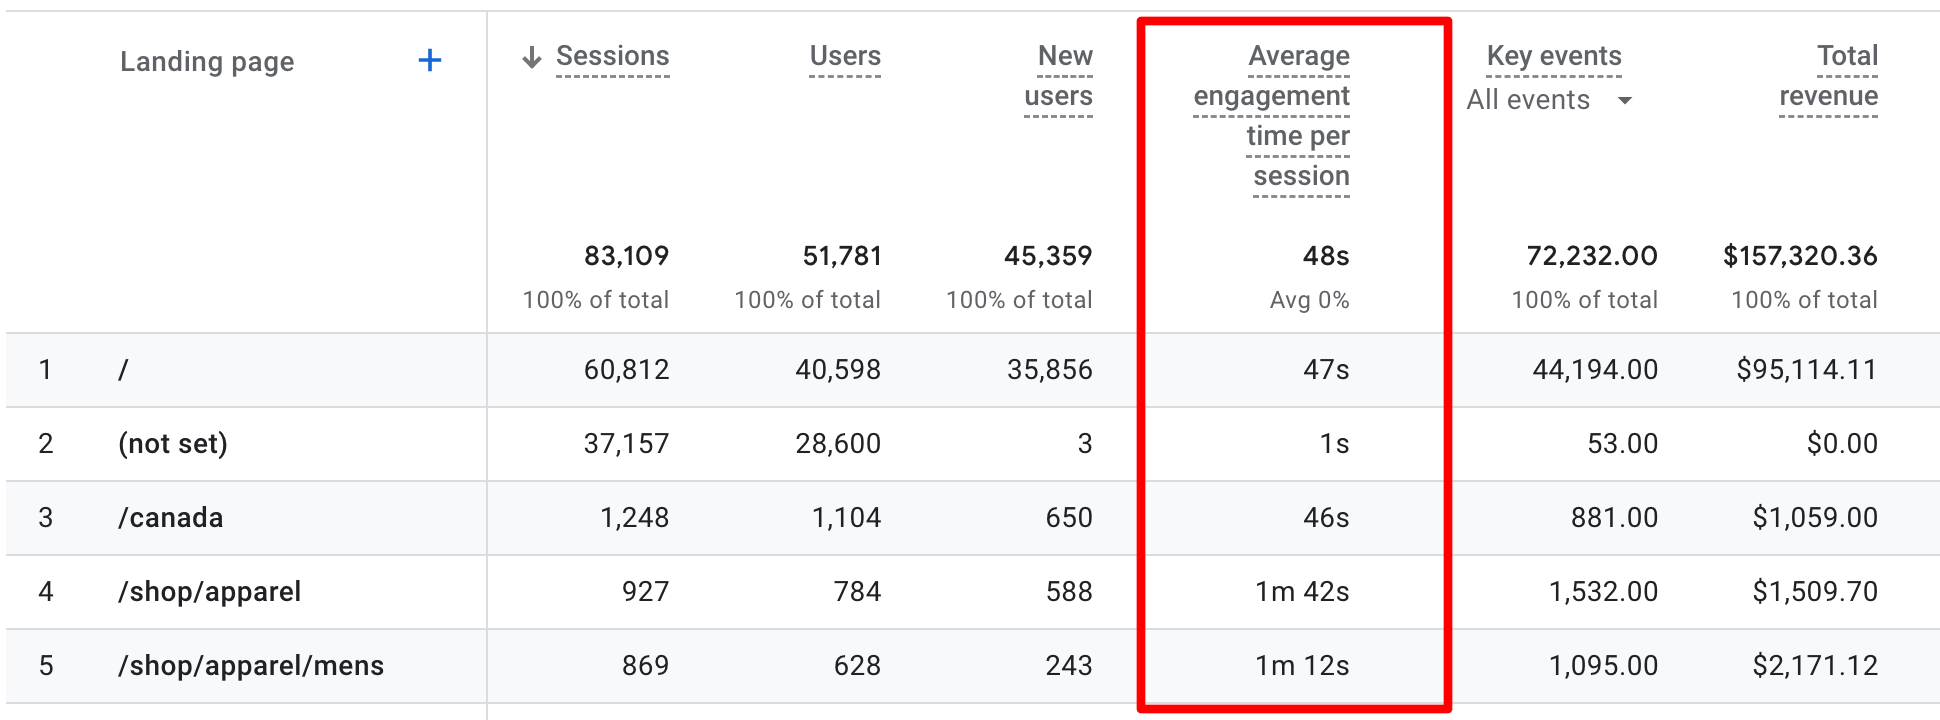 Average engagement time per session - Google Analytics tips